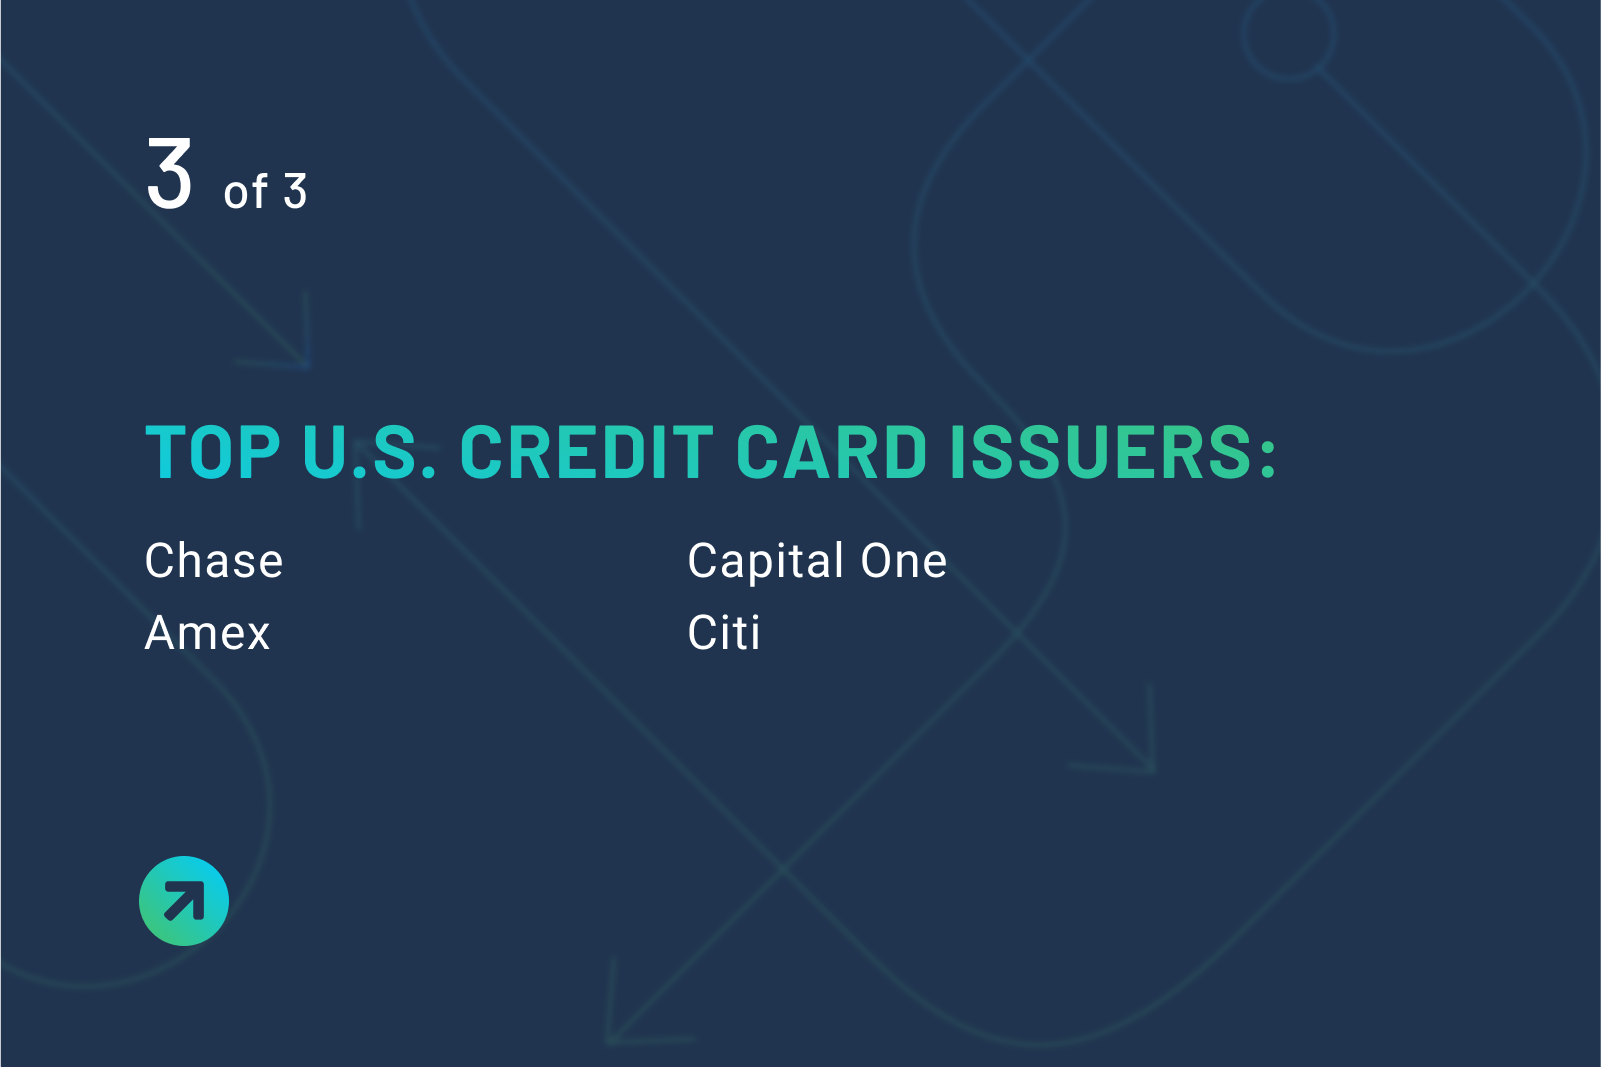 Top U.S. credit card issuers: Chase Amex Capital One Citi